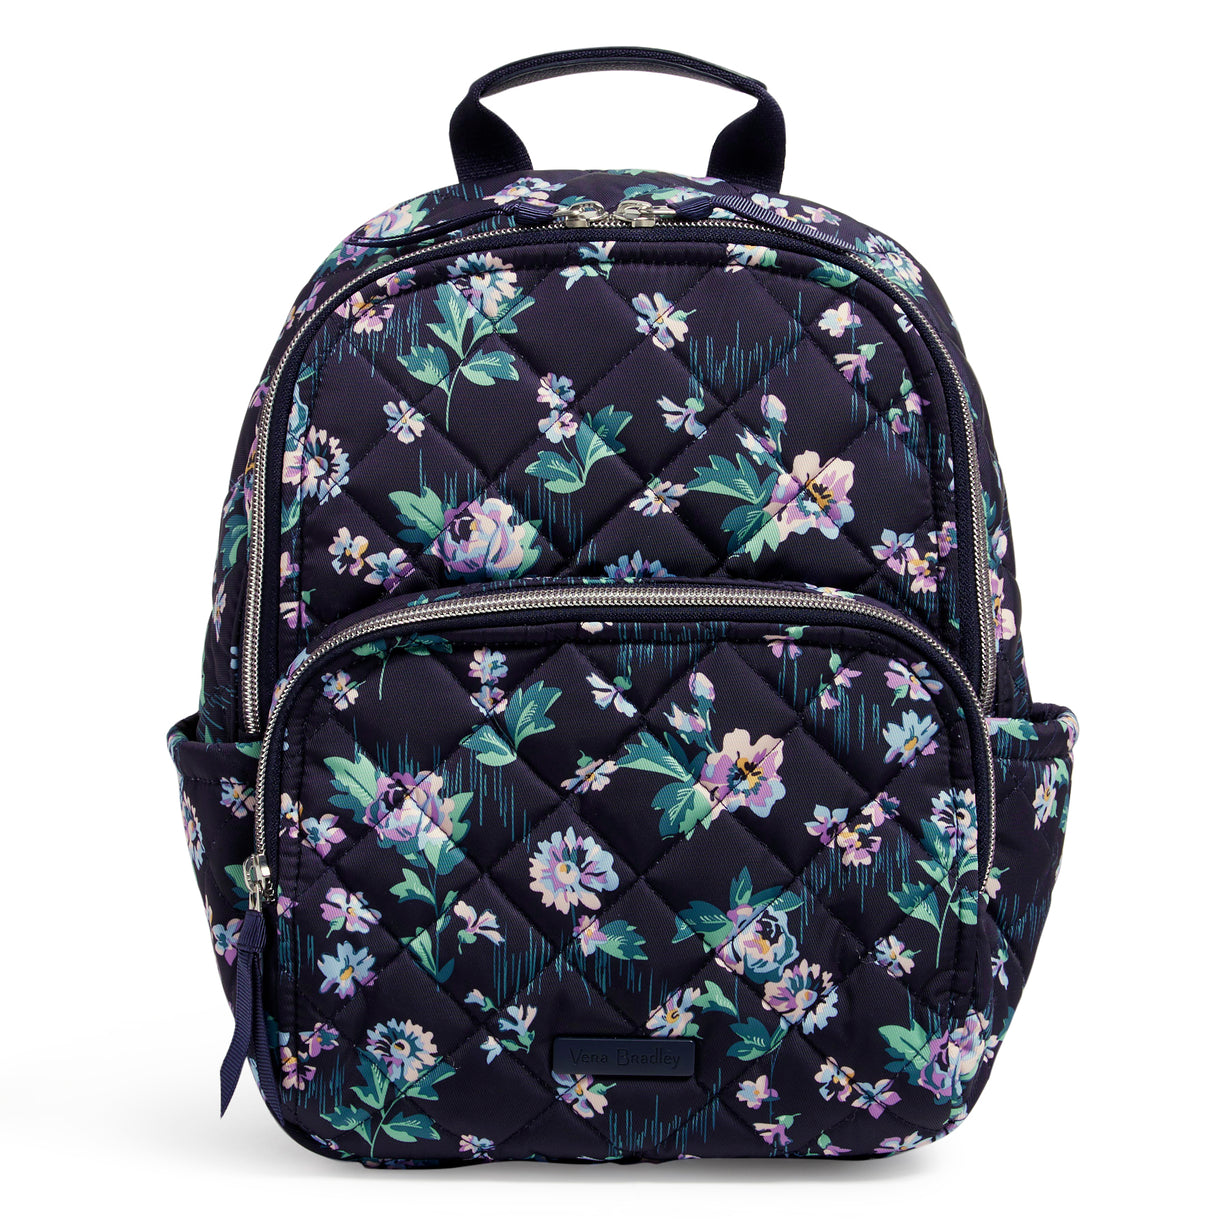 Vera Bradley Small Backpack In Navy Garden Pattern